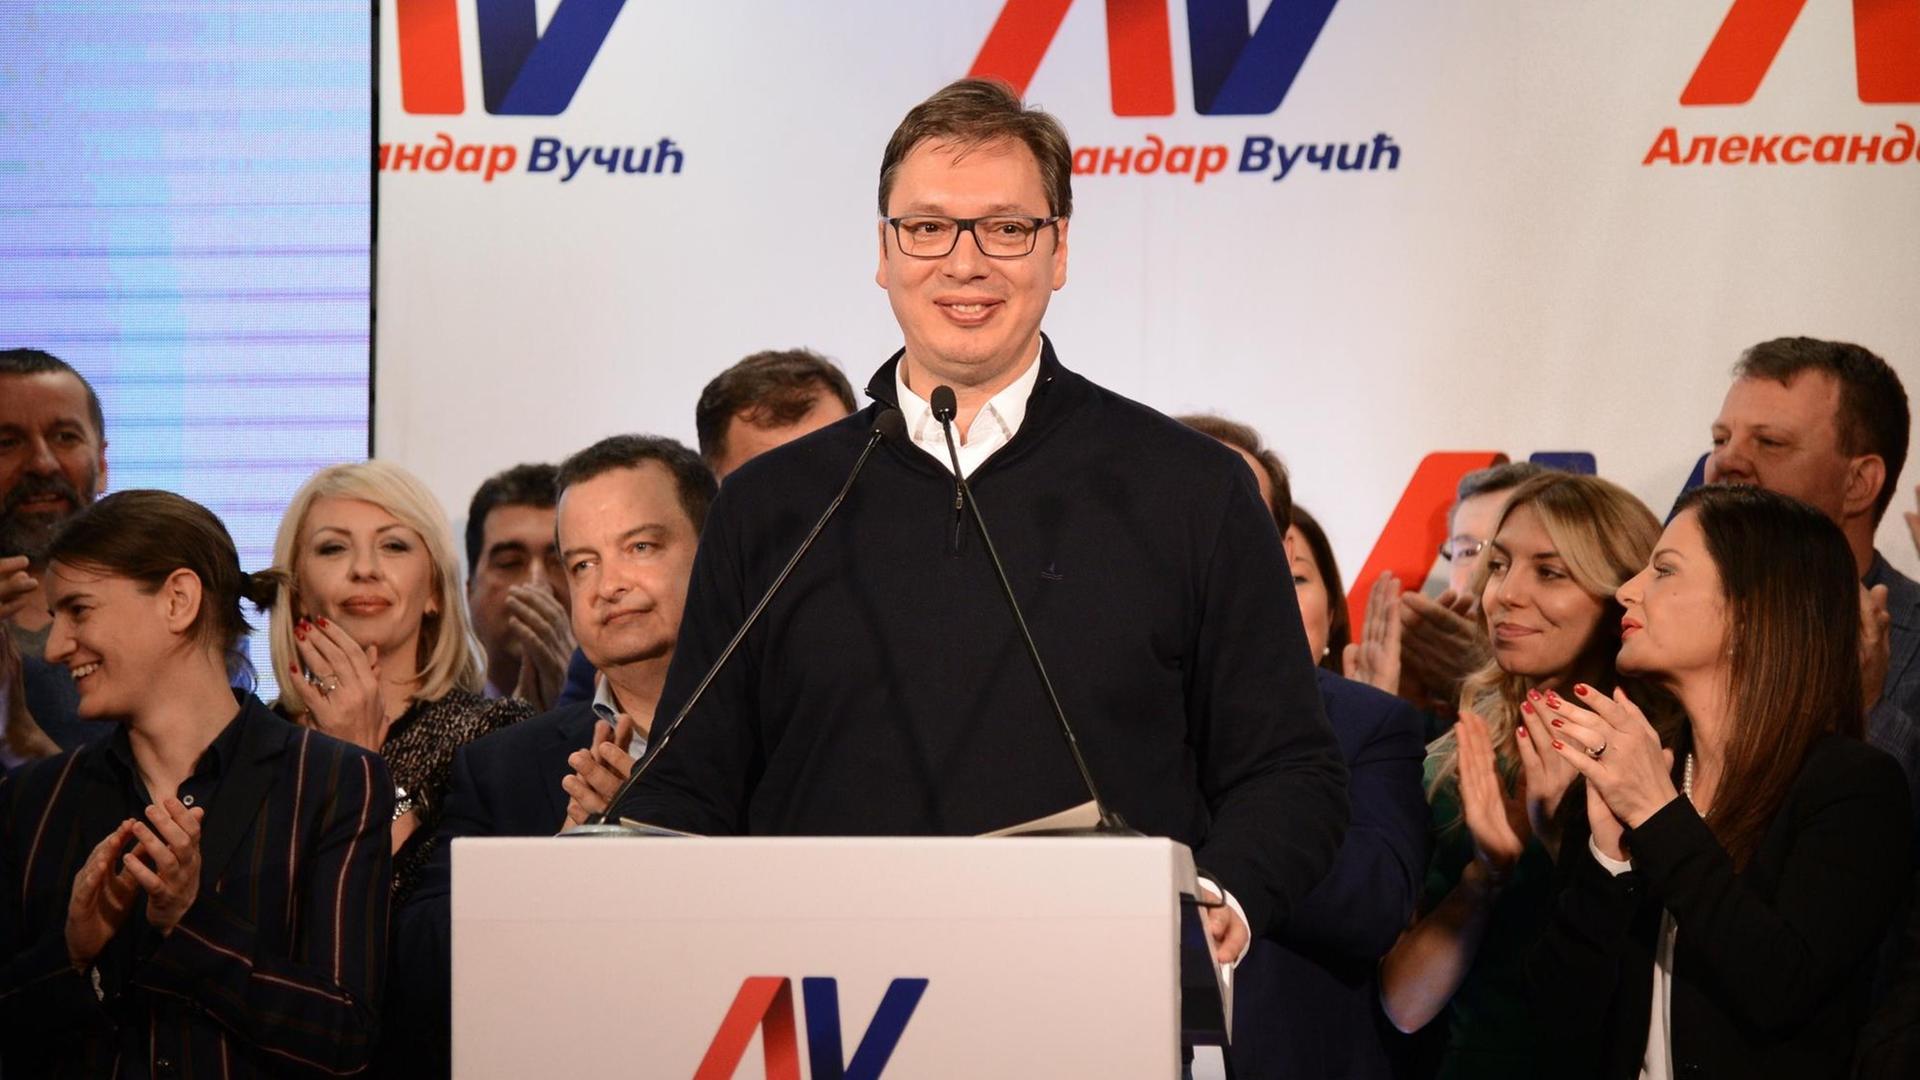 Aleksandar Vucic hat die Präsidentenwahl in Serbien gewonnen.